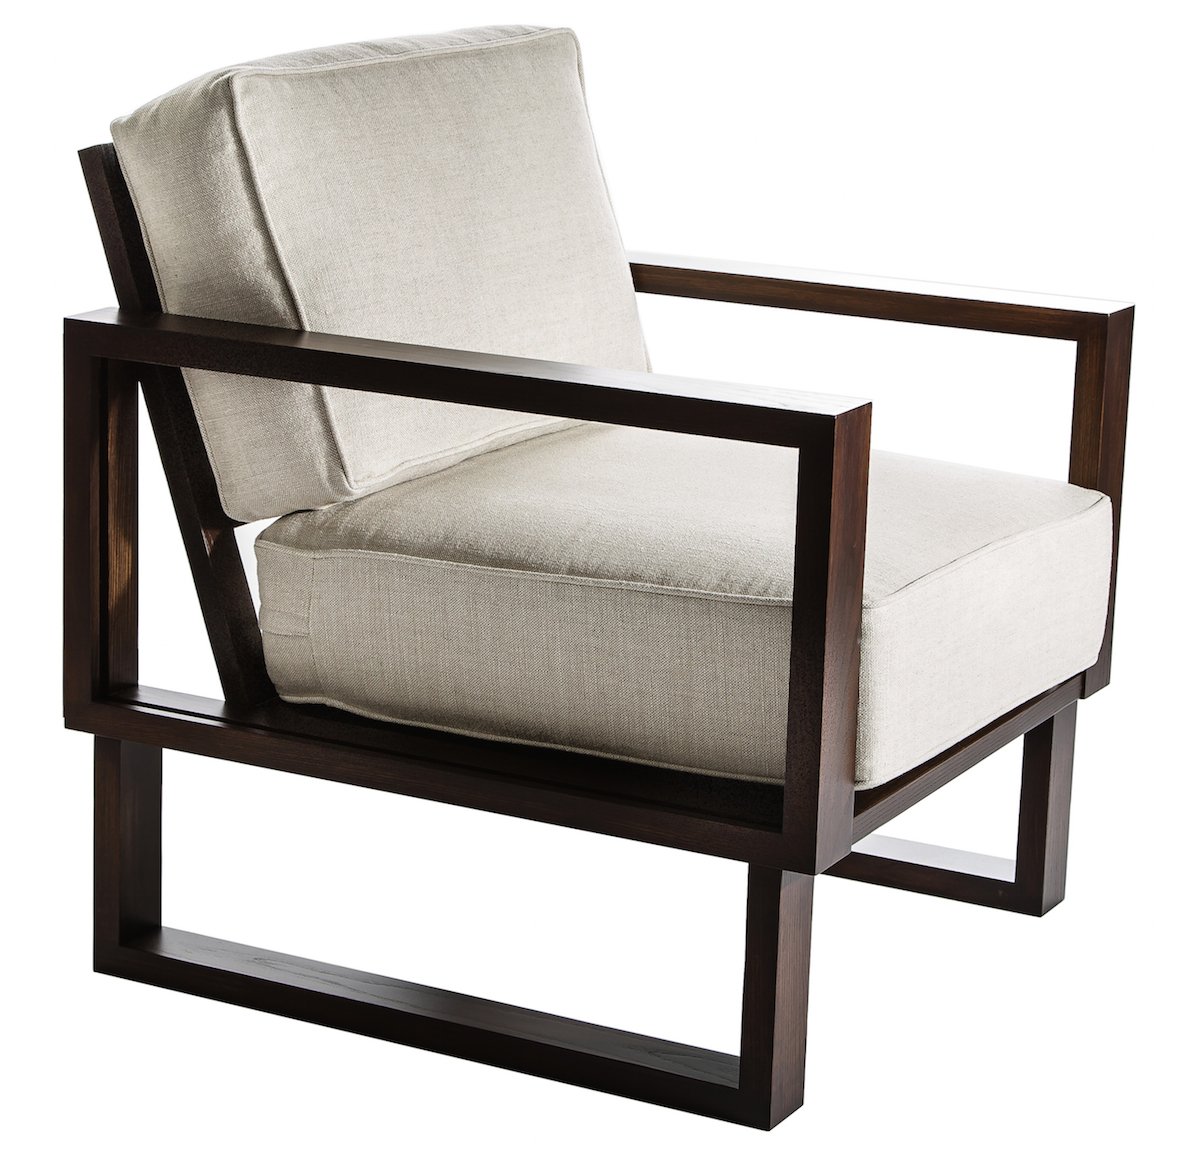 Modern Art Chairs : Modern Art Deco Dining Chair | Modshop - ModShop ...